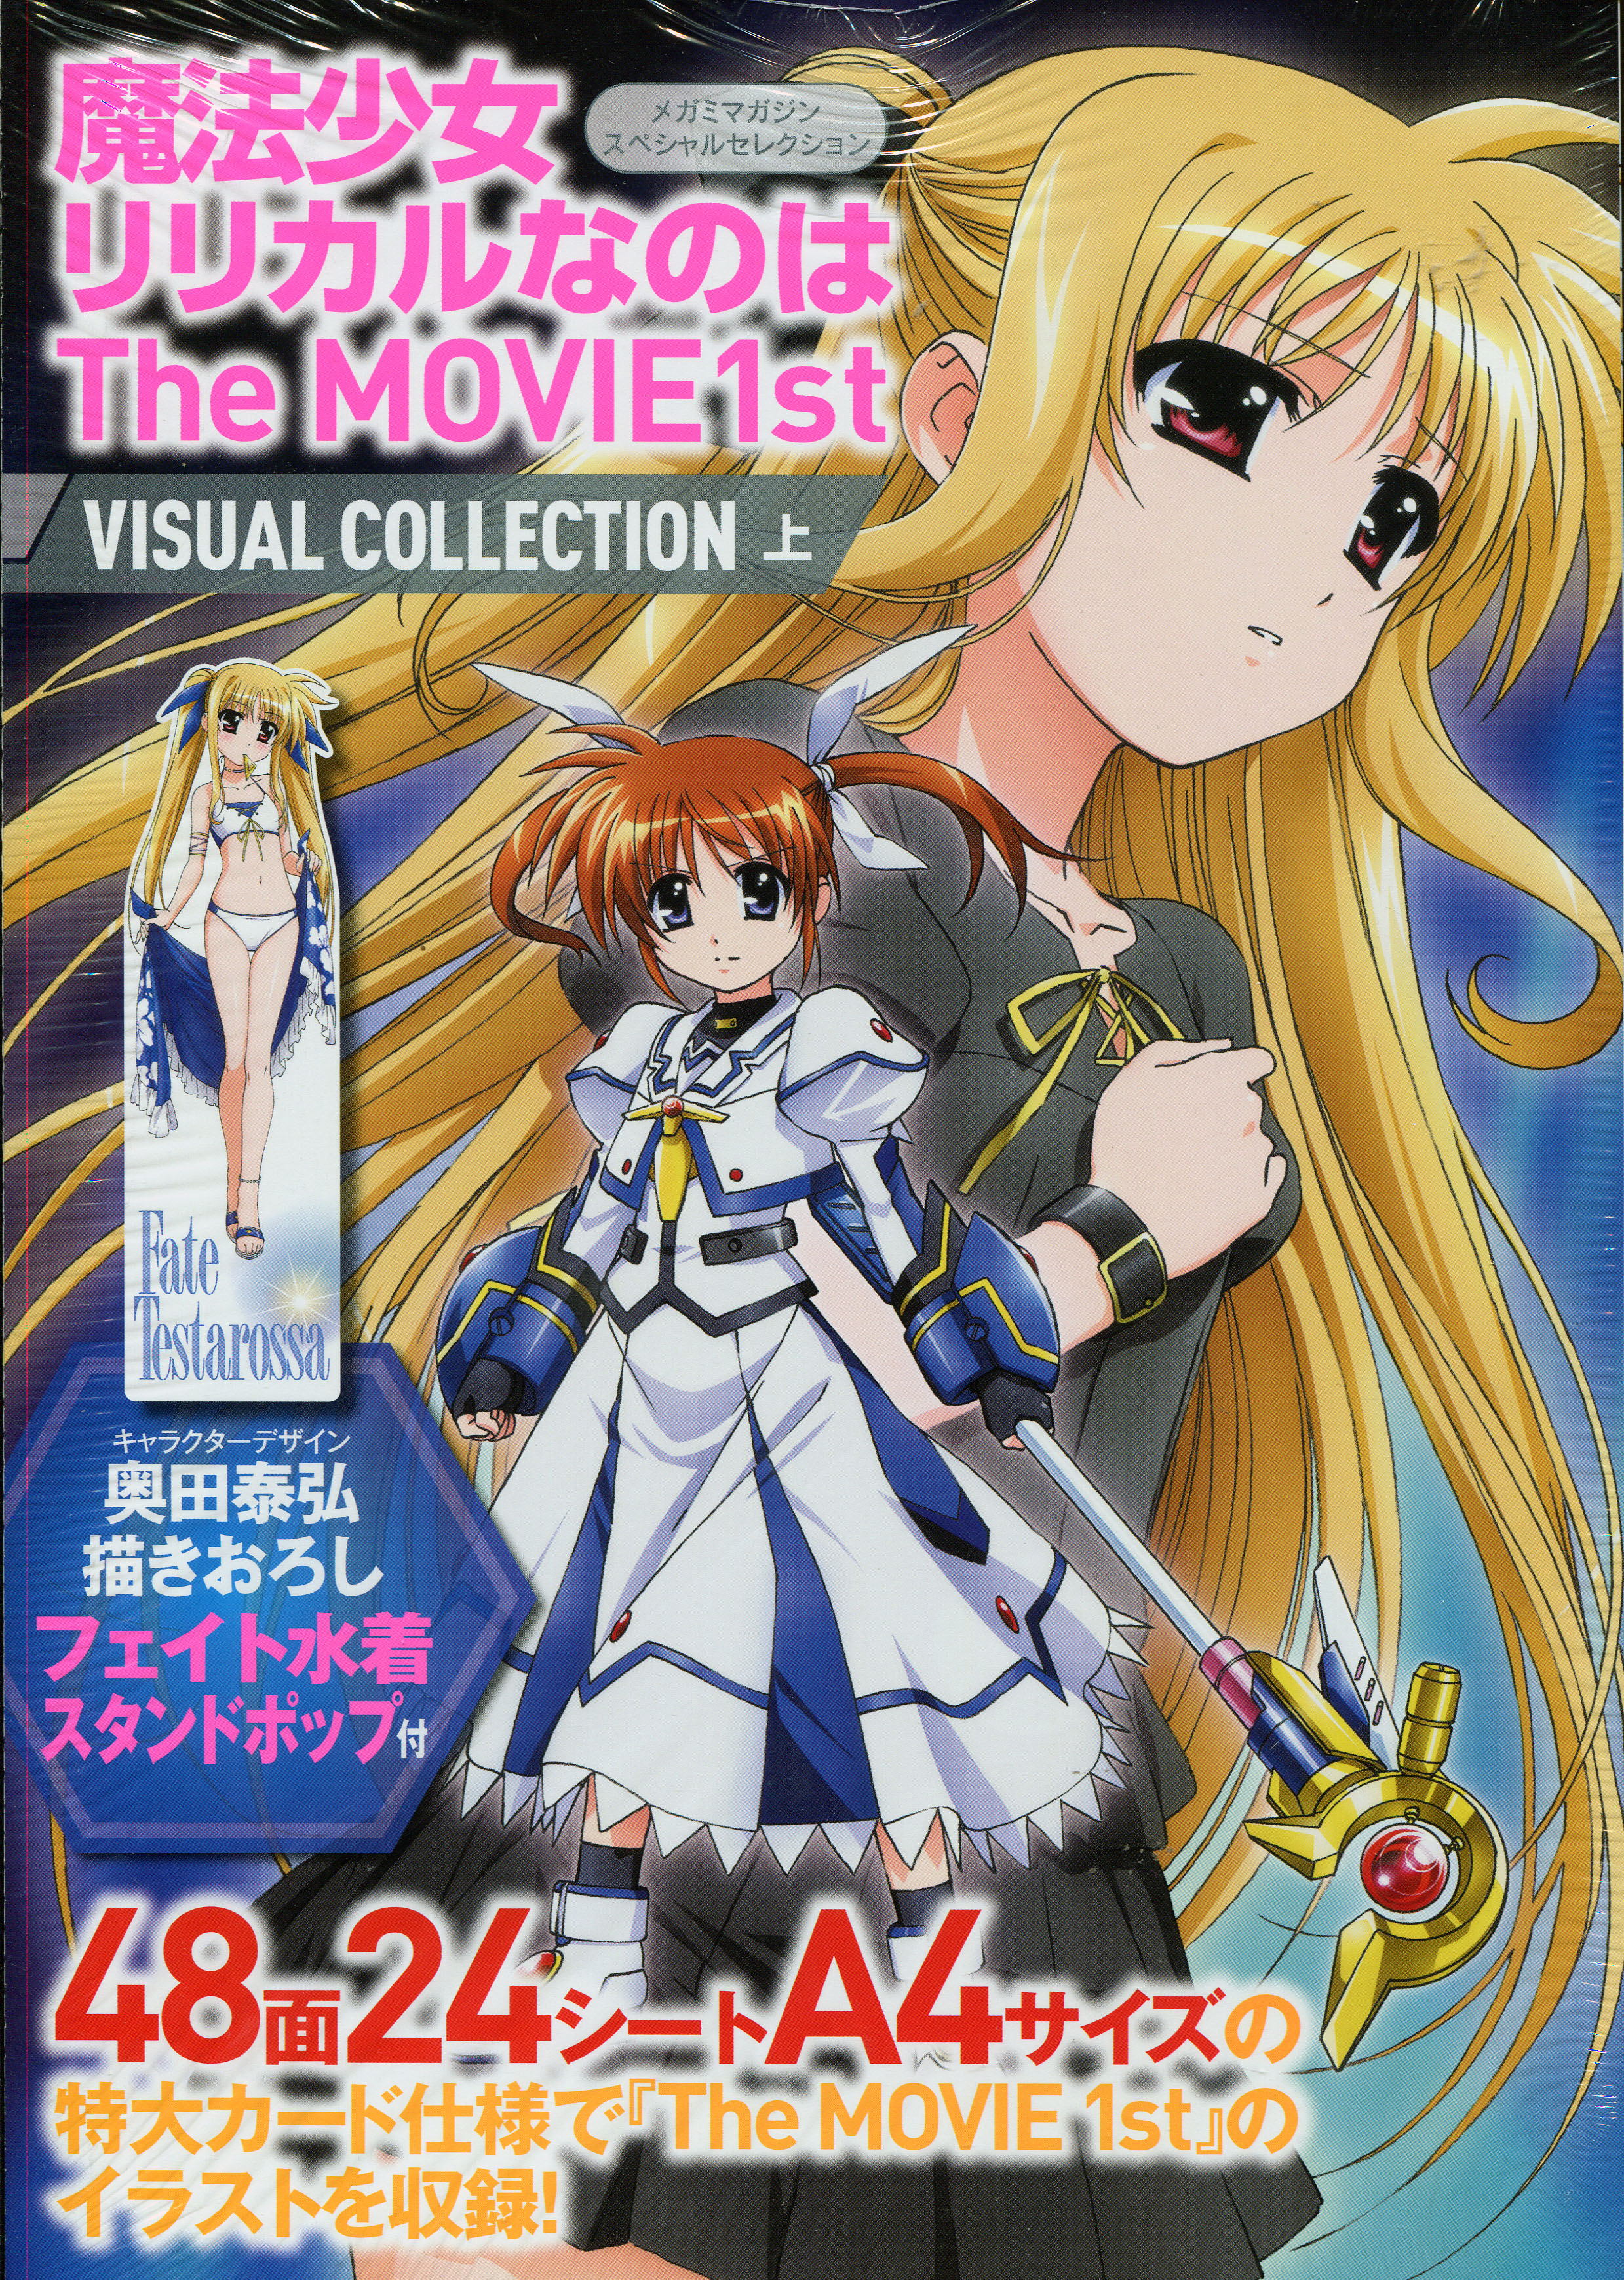 Magical Girl Lyrical Nanoha The Movie 1st Visual Collection Vol. 1